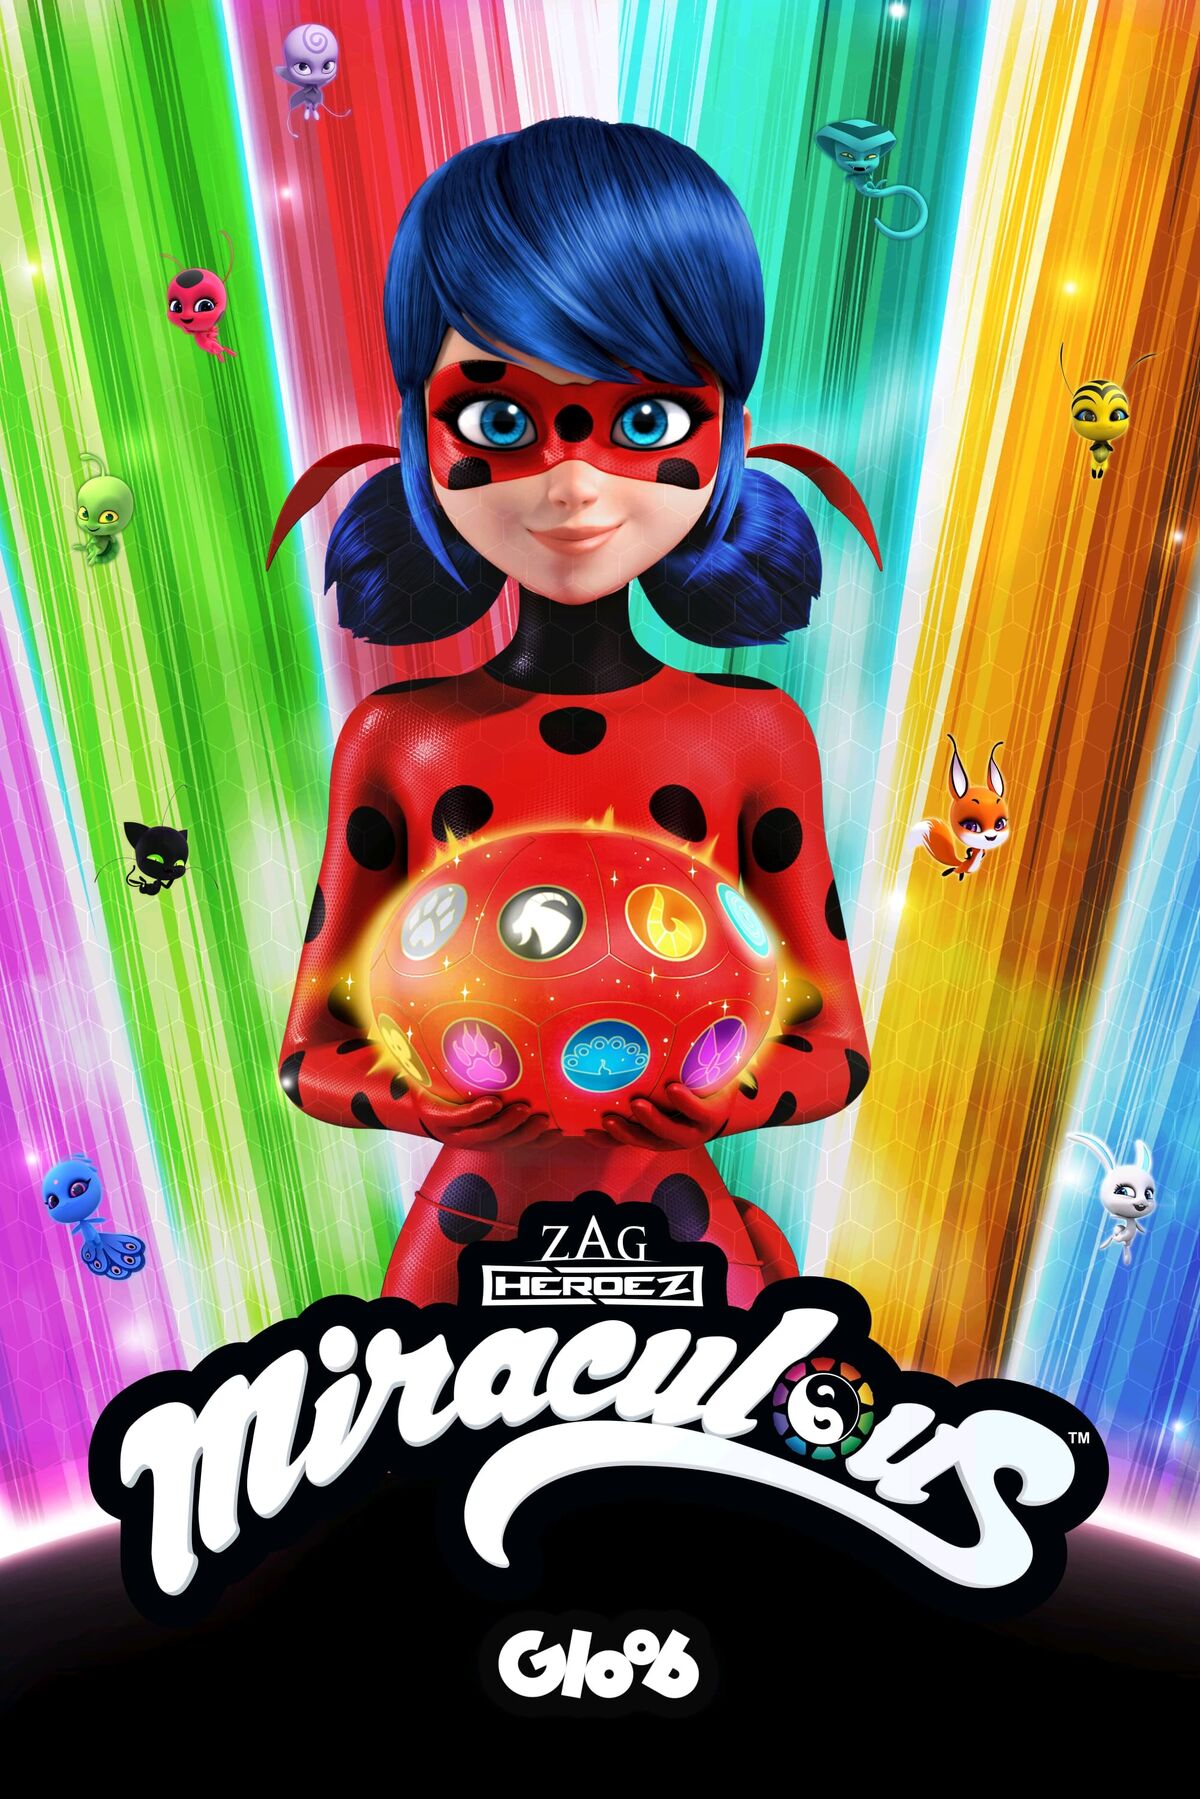 Quinta temporada de “Miraculous – As Aventuras de Ladybug” chega ao Gloob  em outubro